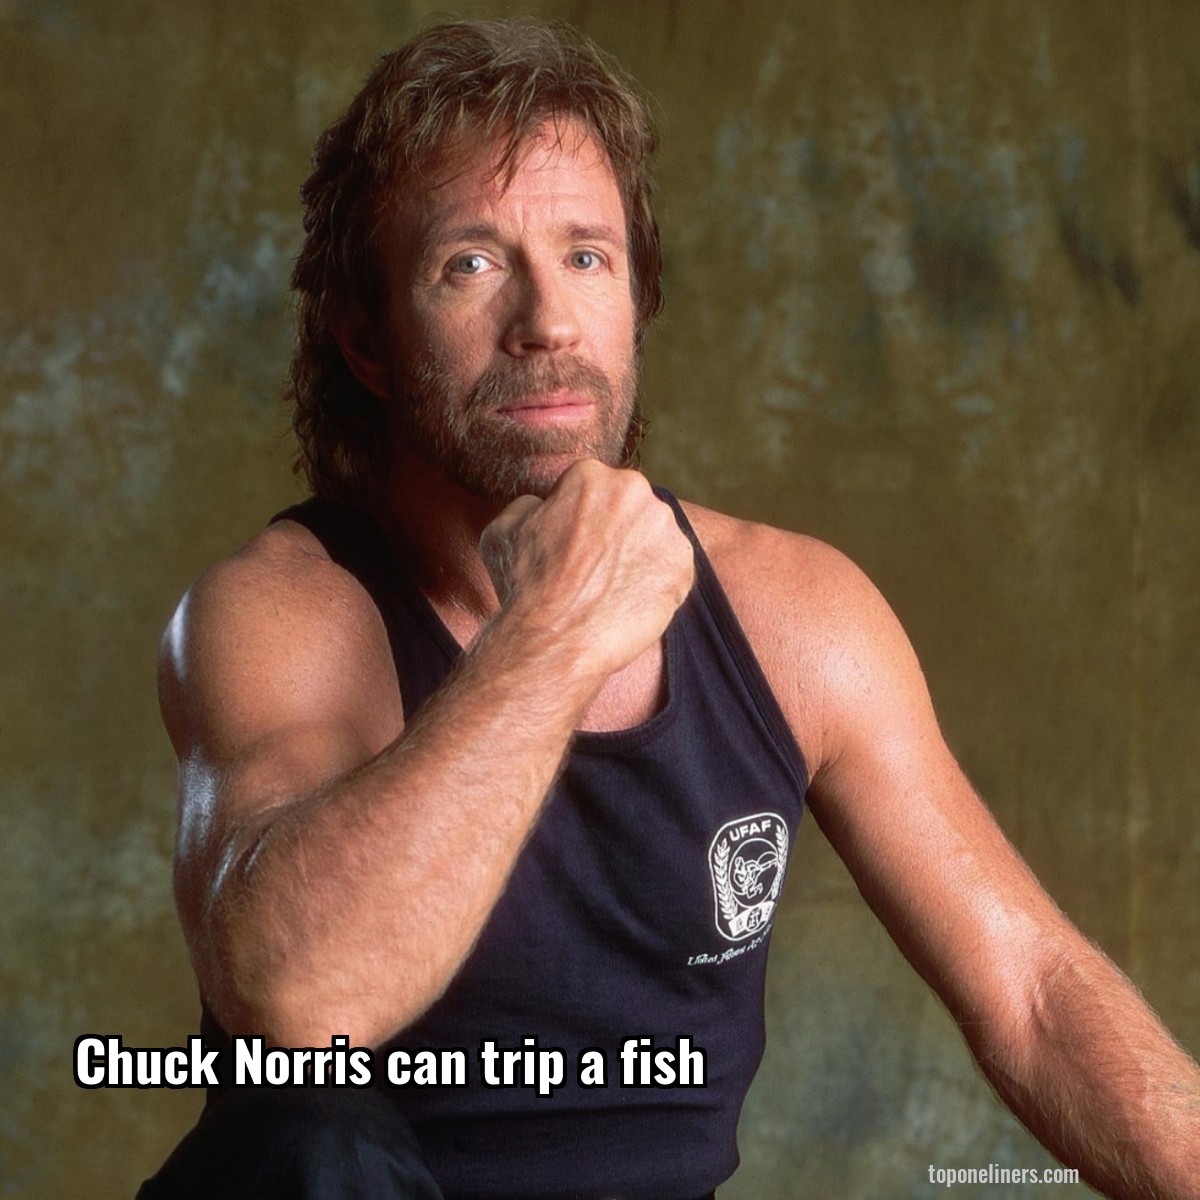 Chuck Norris can trip a fish